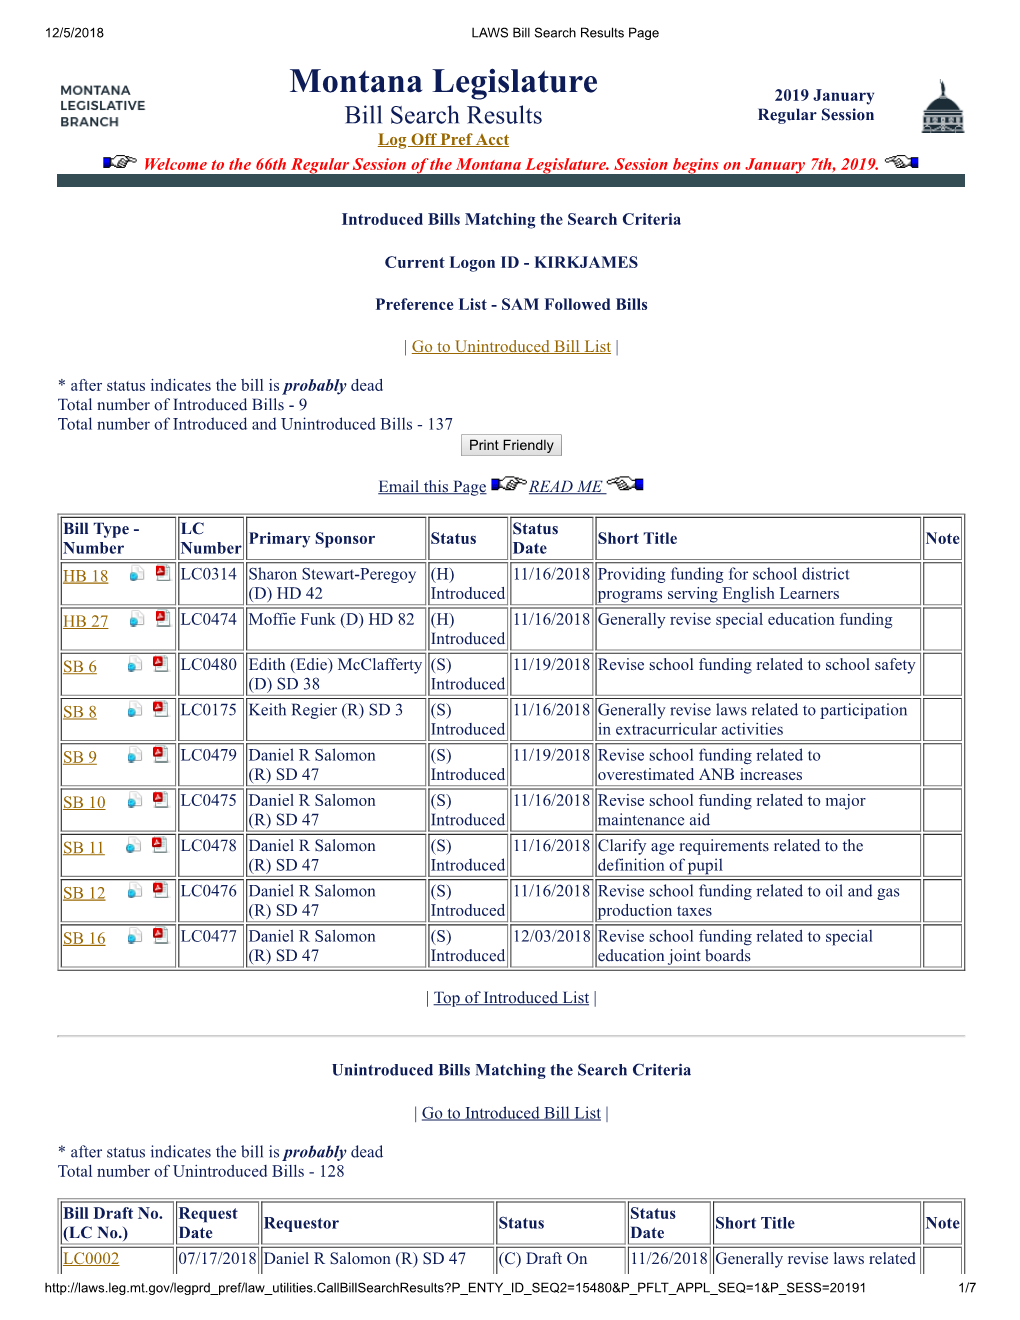 Montana Legislature 2019 January Bill Search Results Regular Session